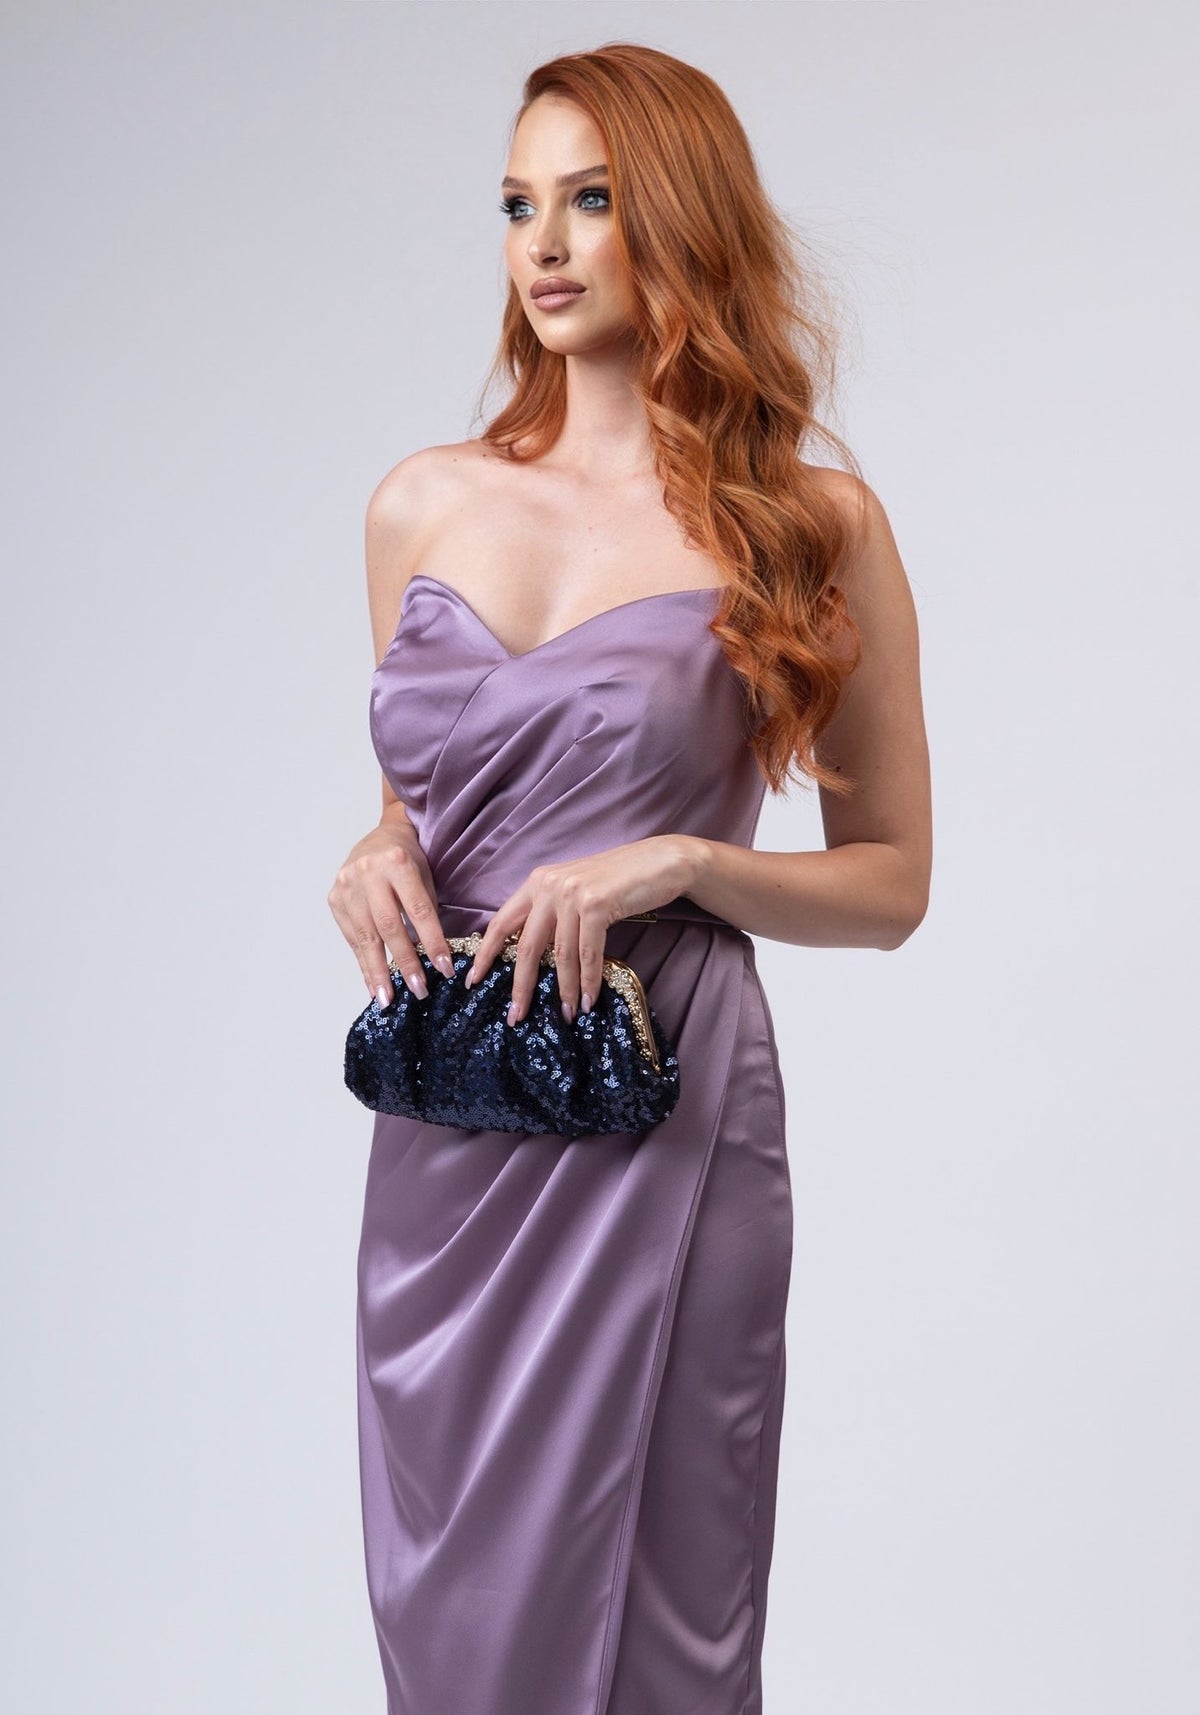 Long corseted violet dress